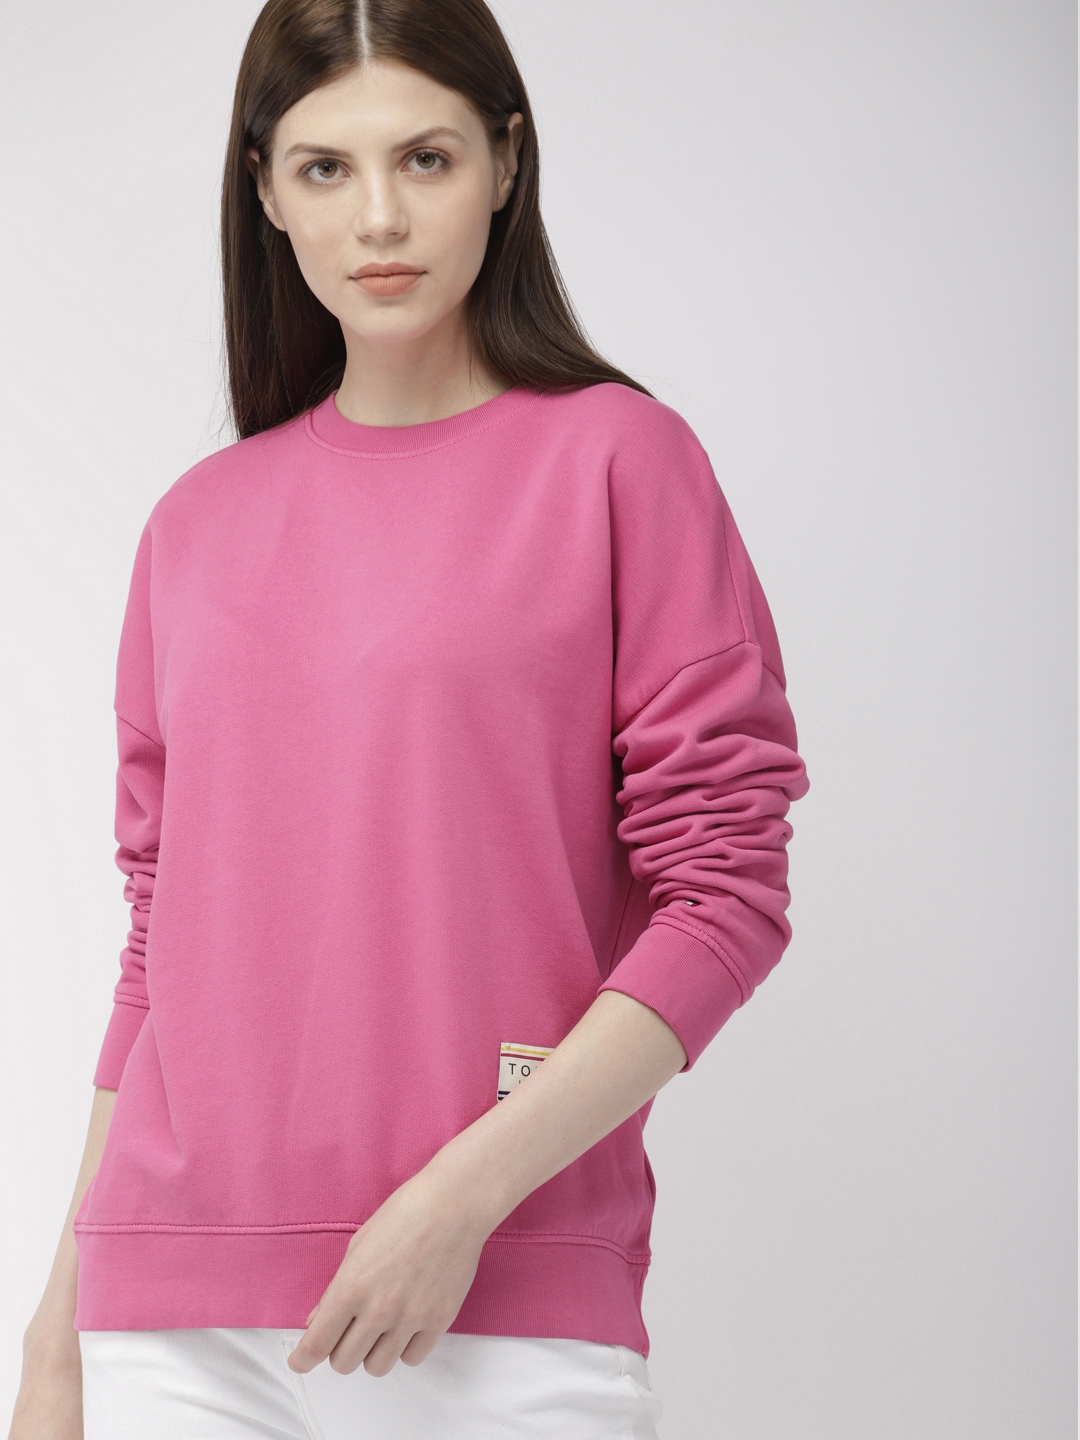 womens pink tommy hilfiger sweatshirt